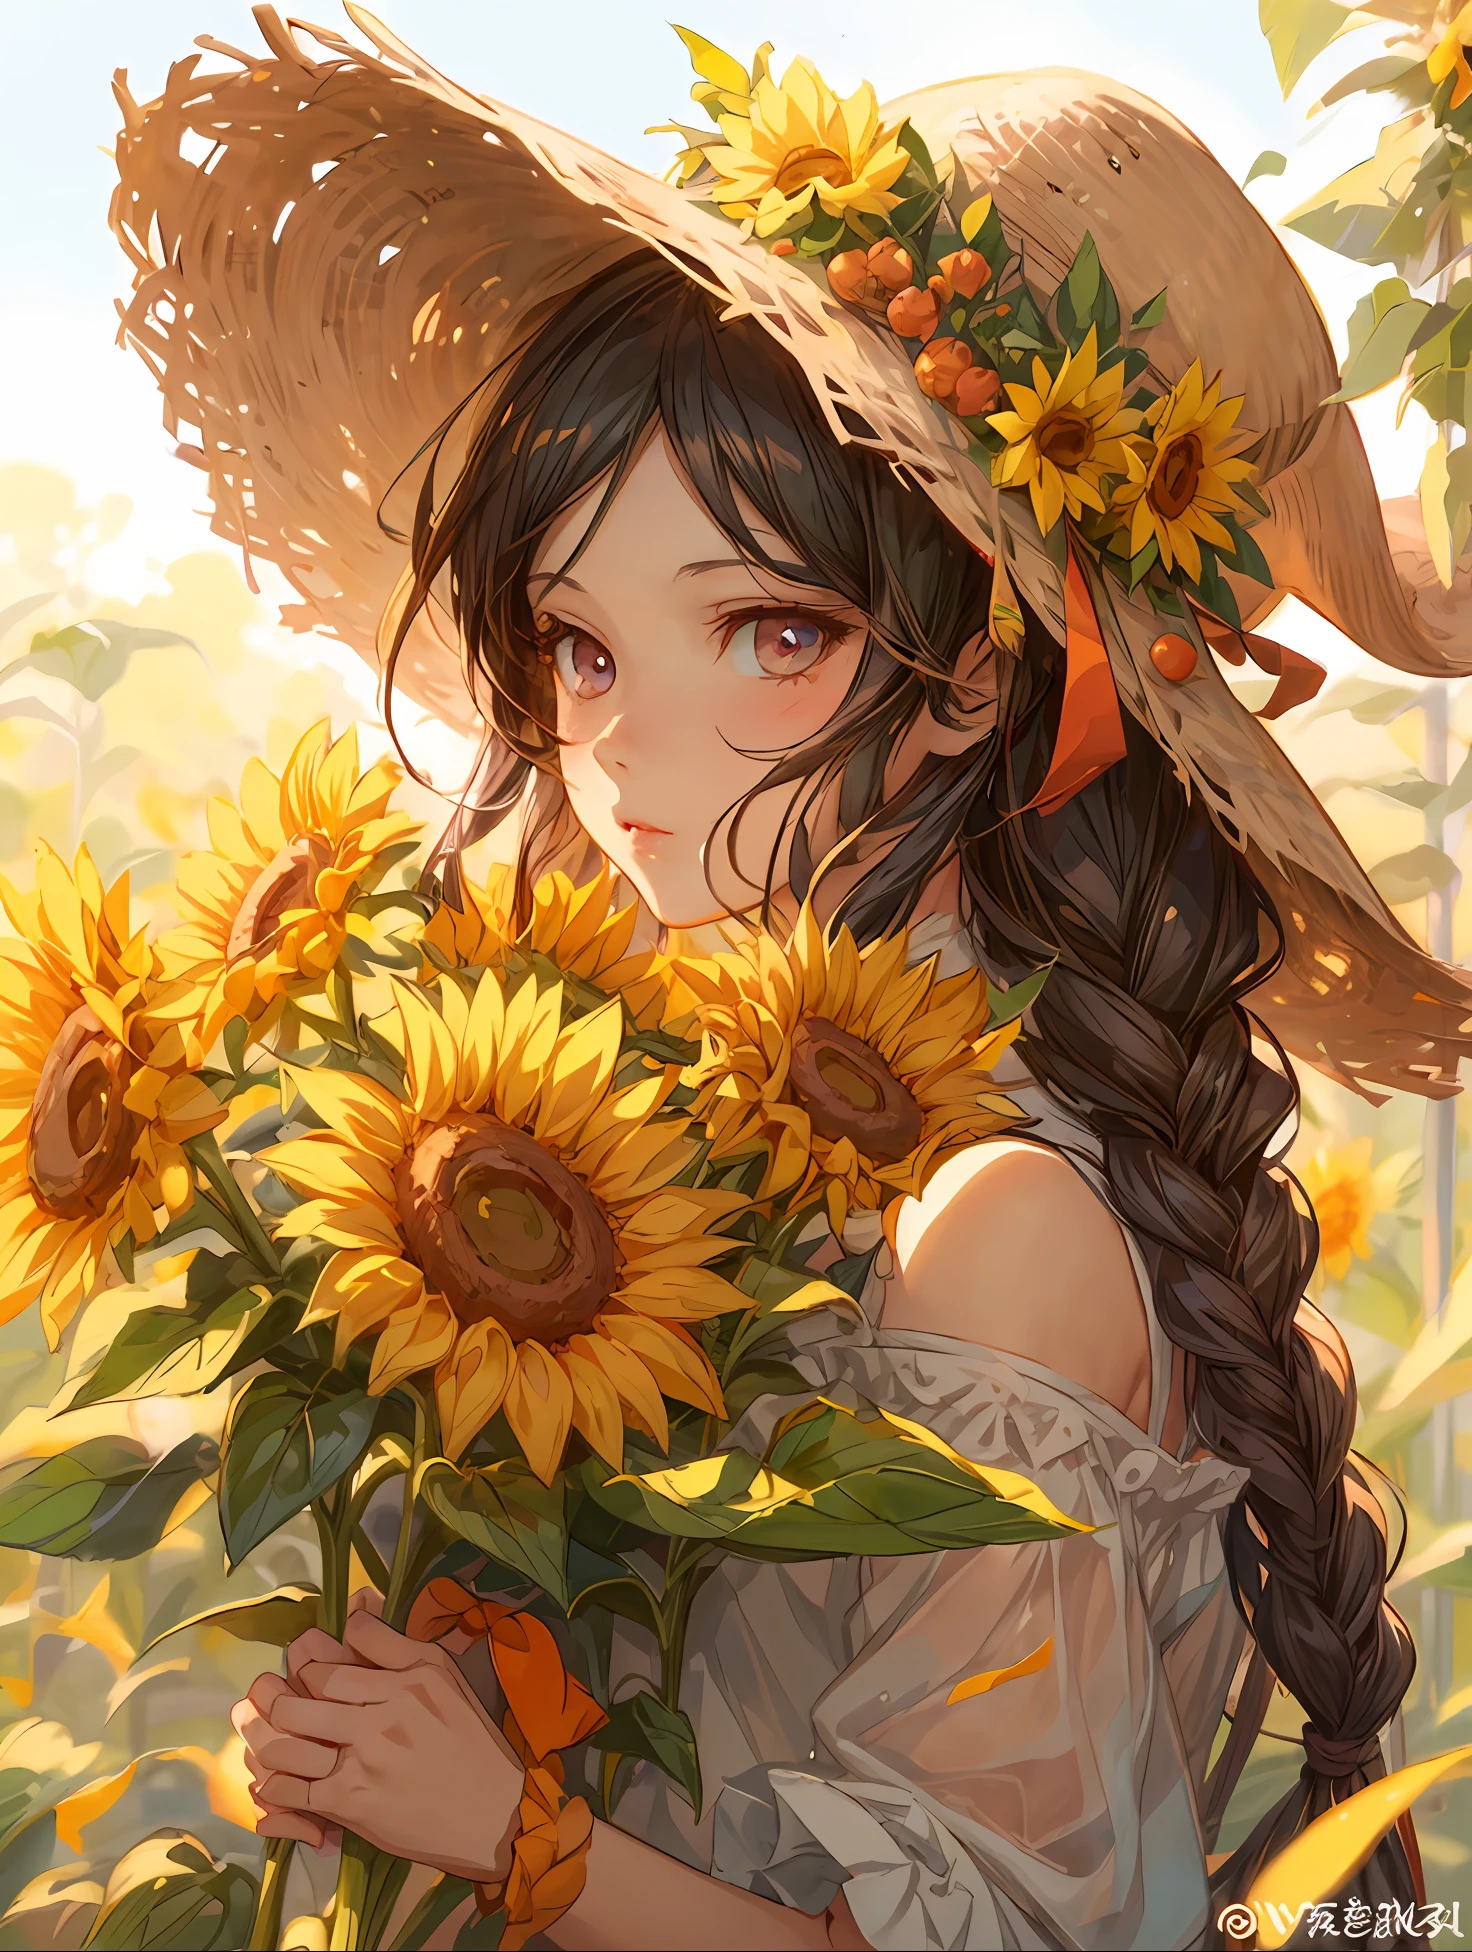 Anime girl in sunflower field 5120x3200 - ImgPile